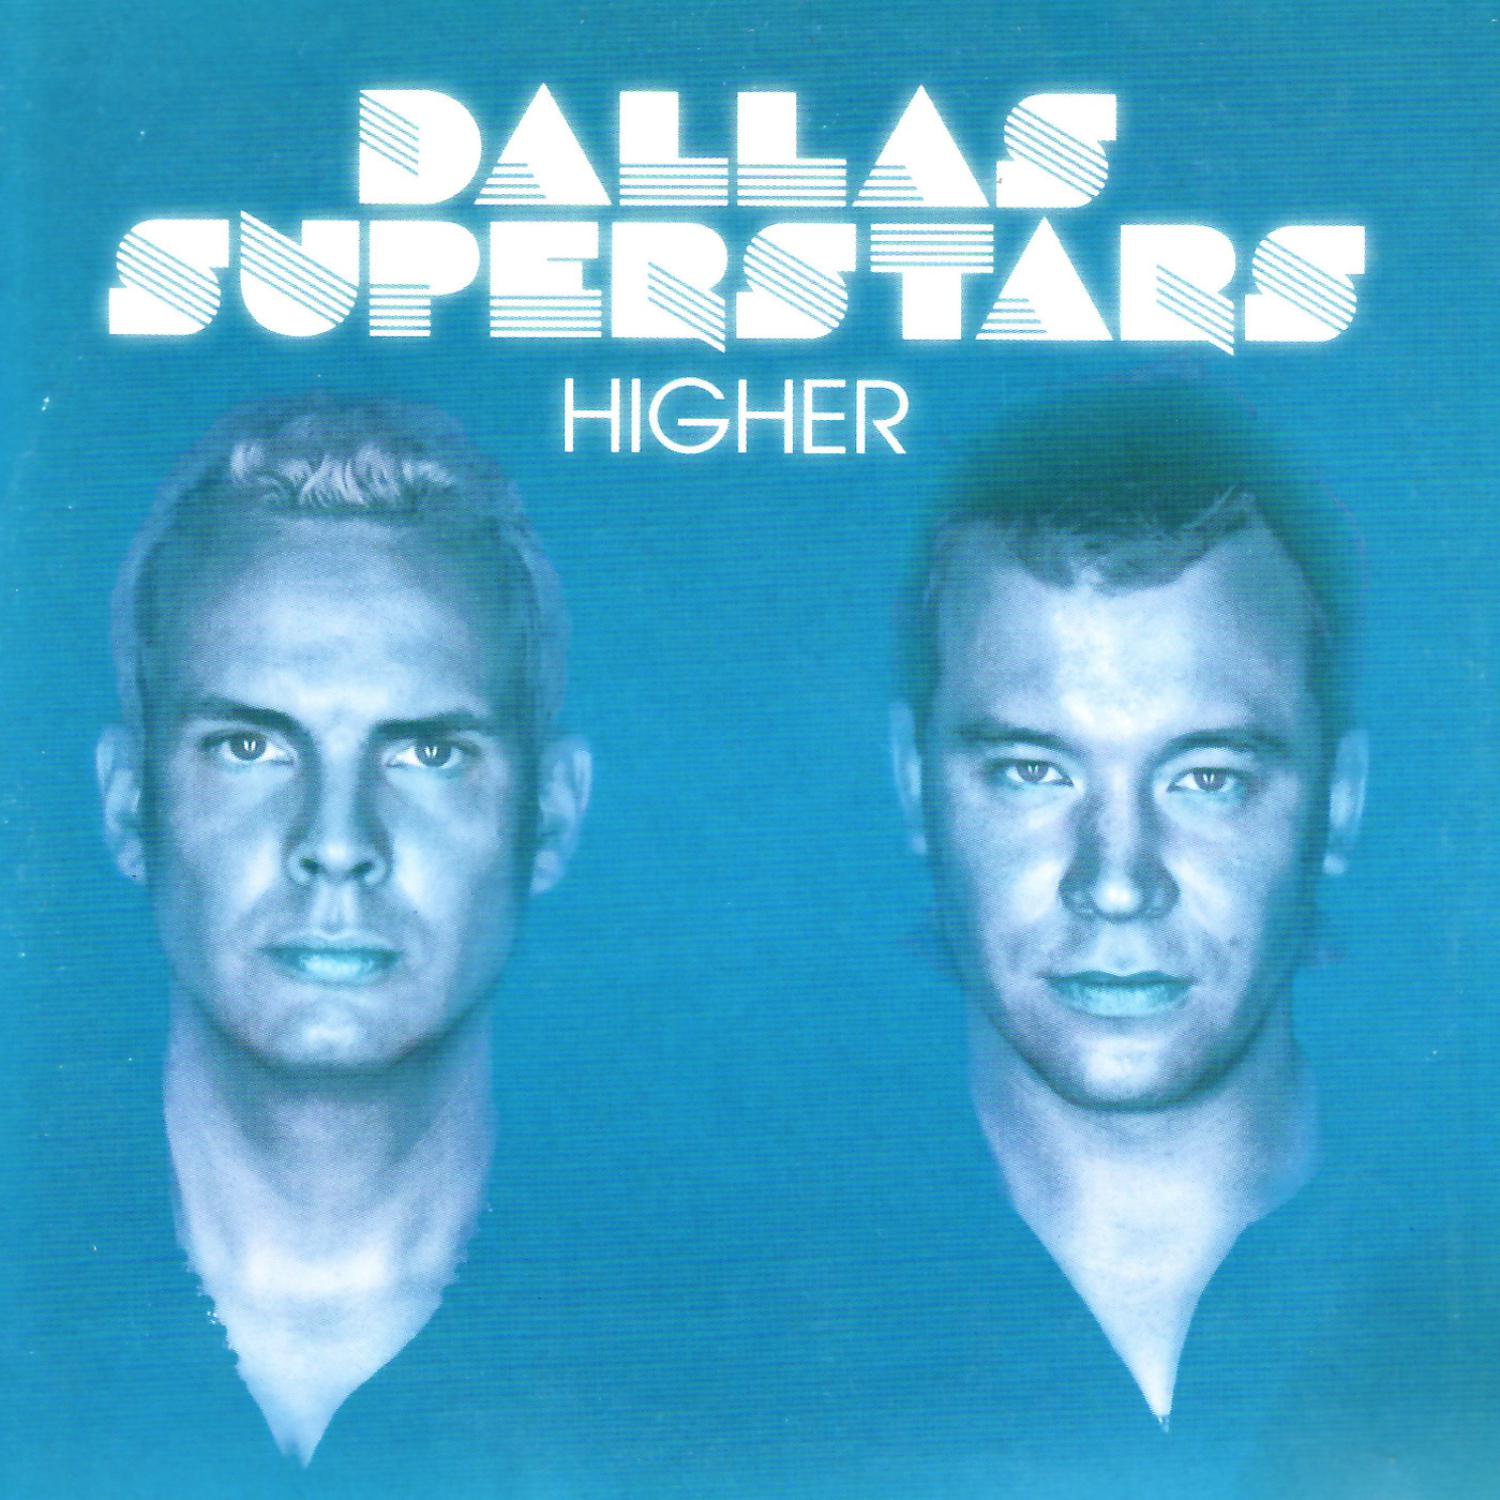 Dallas Superstars - Higher (Radio Edit)